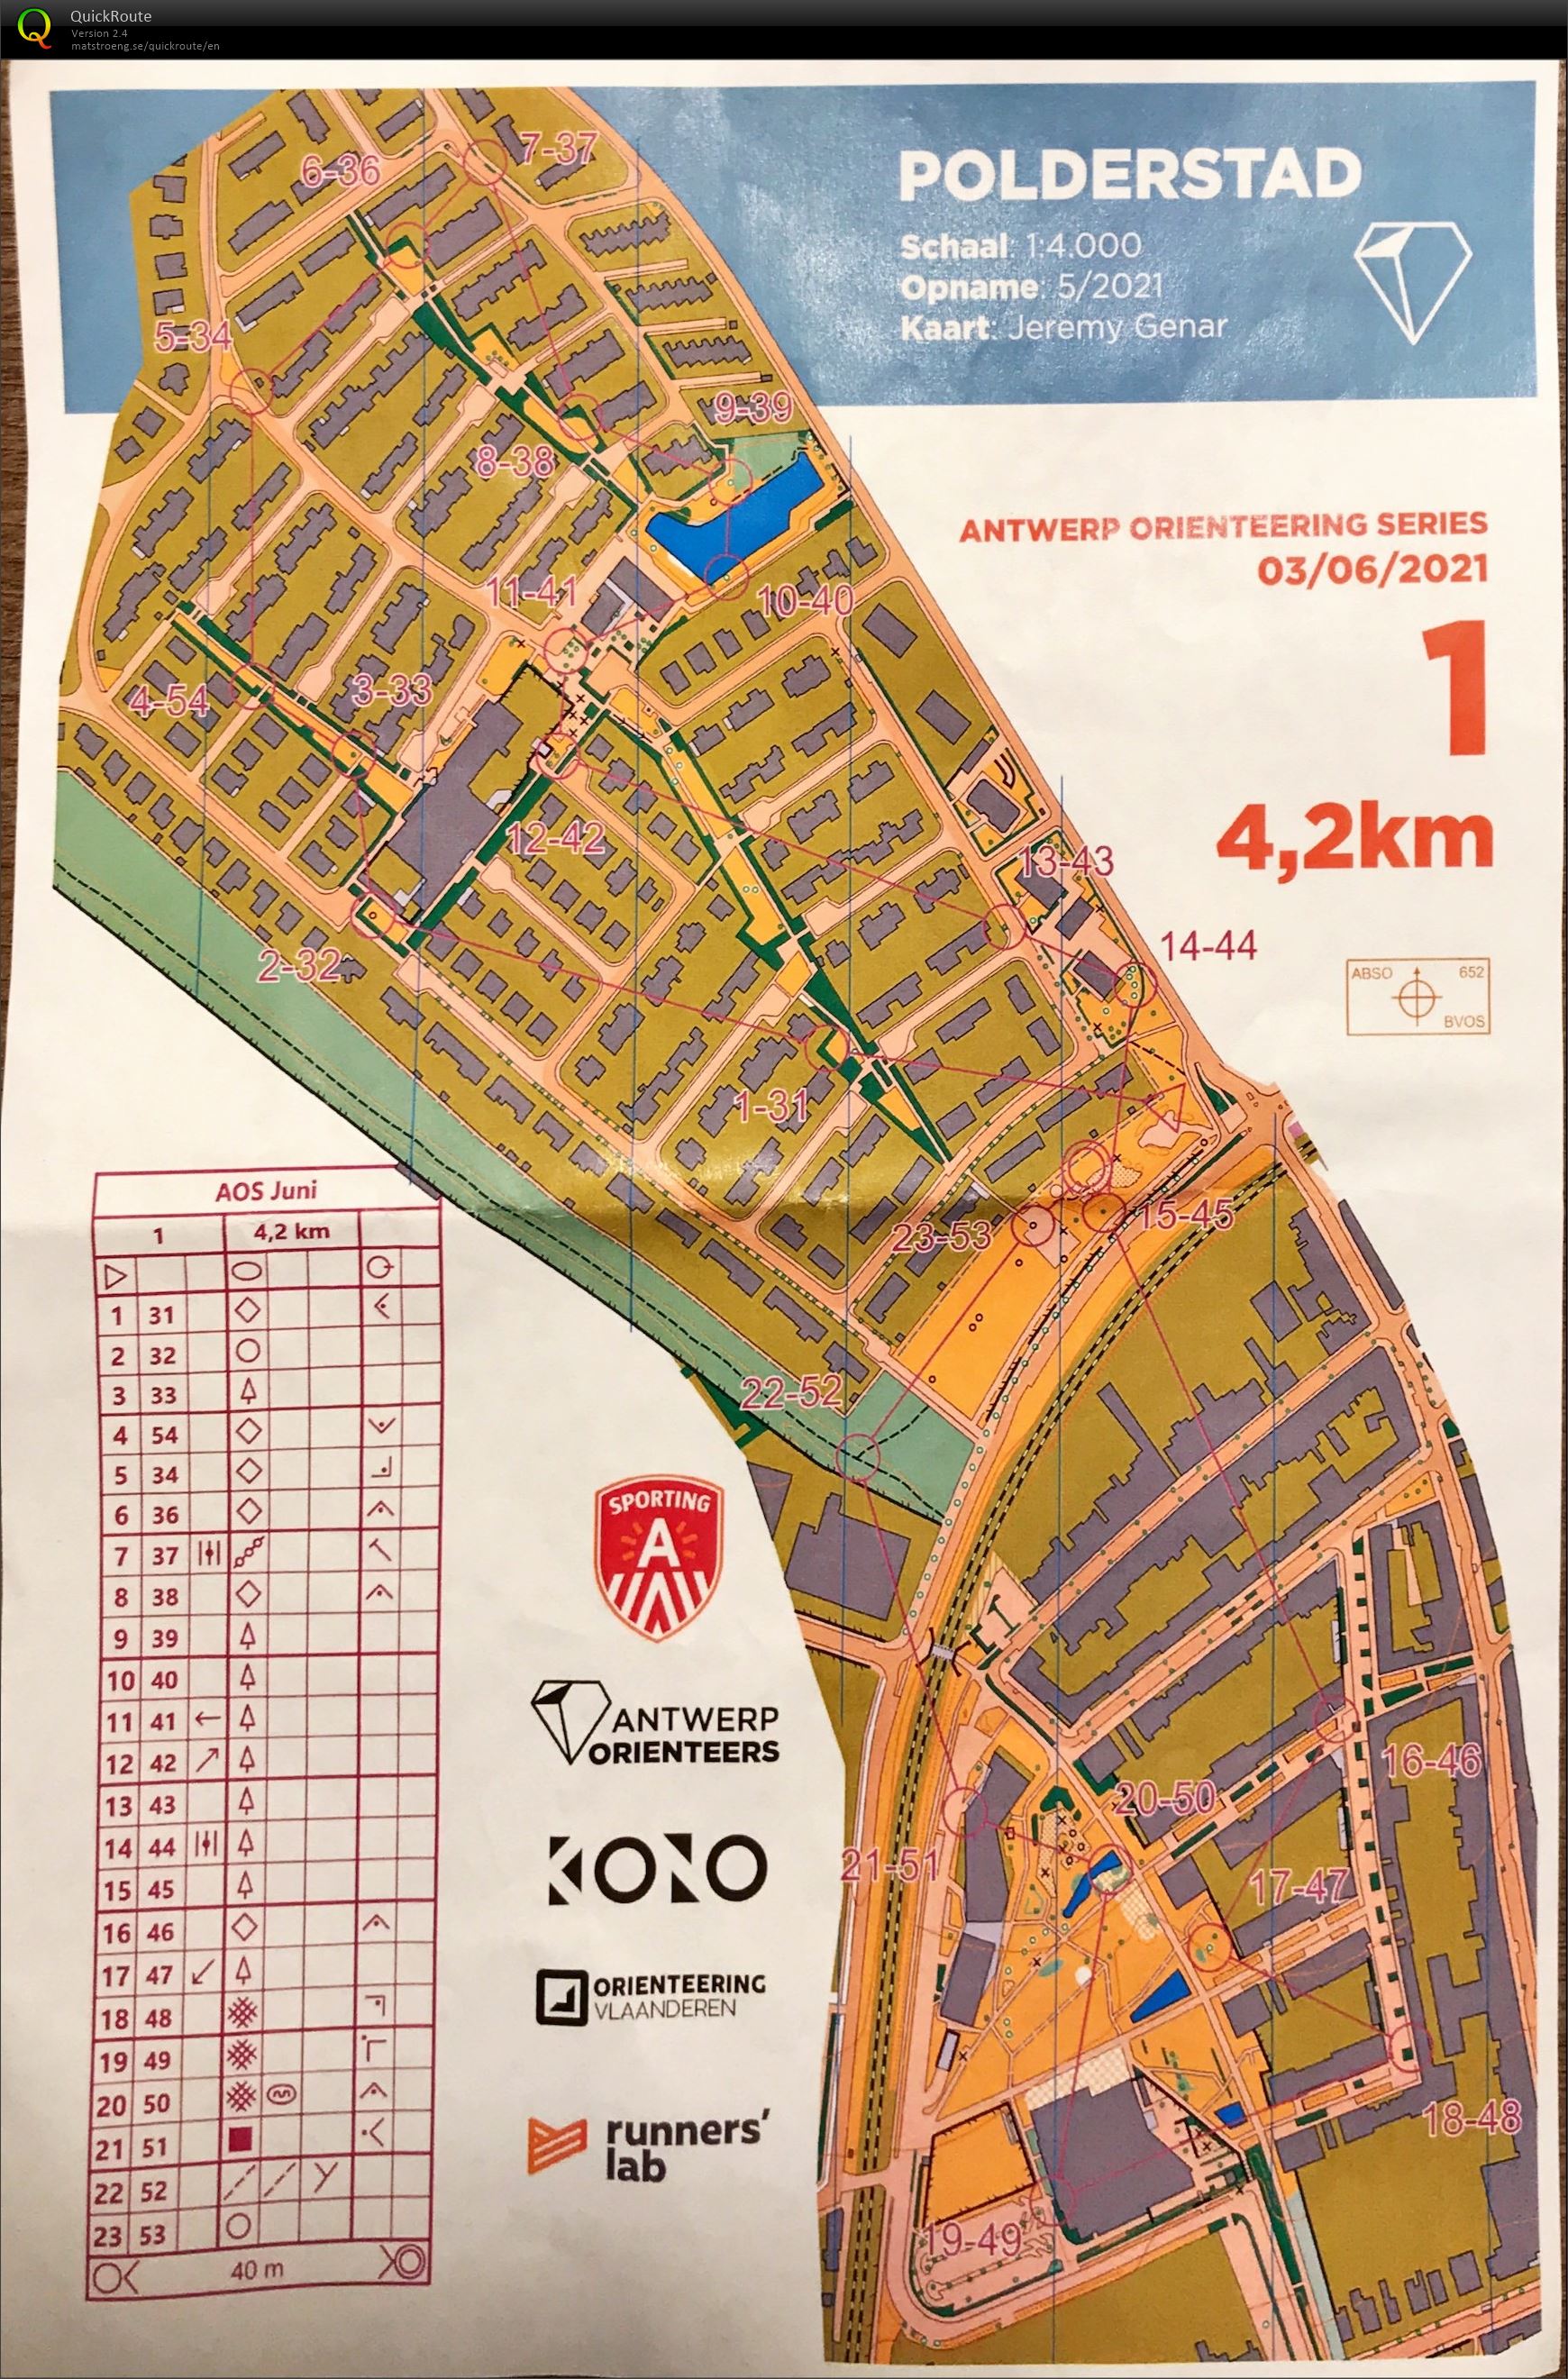 Antwerp Orienteering Series - Polderstad - 4.2K (2021-06-03)